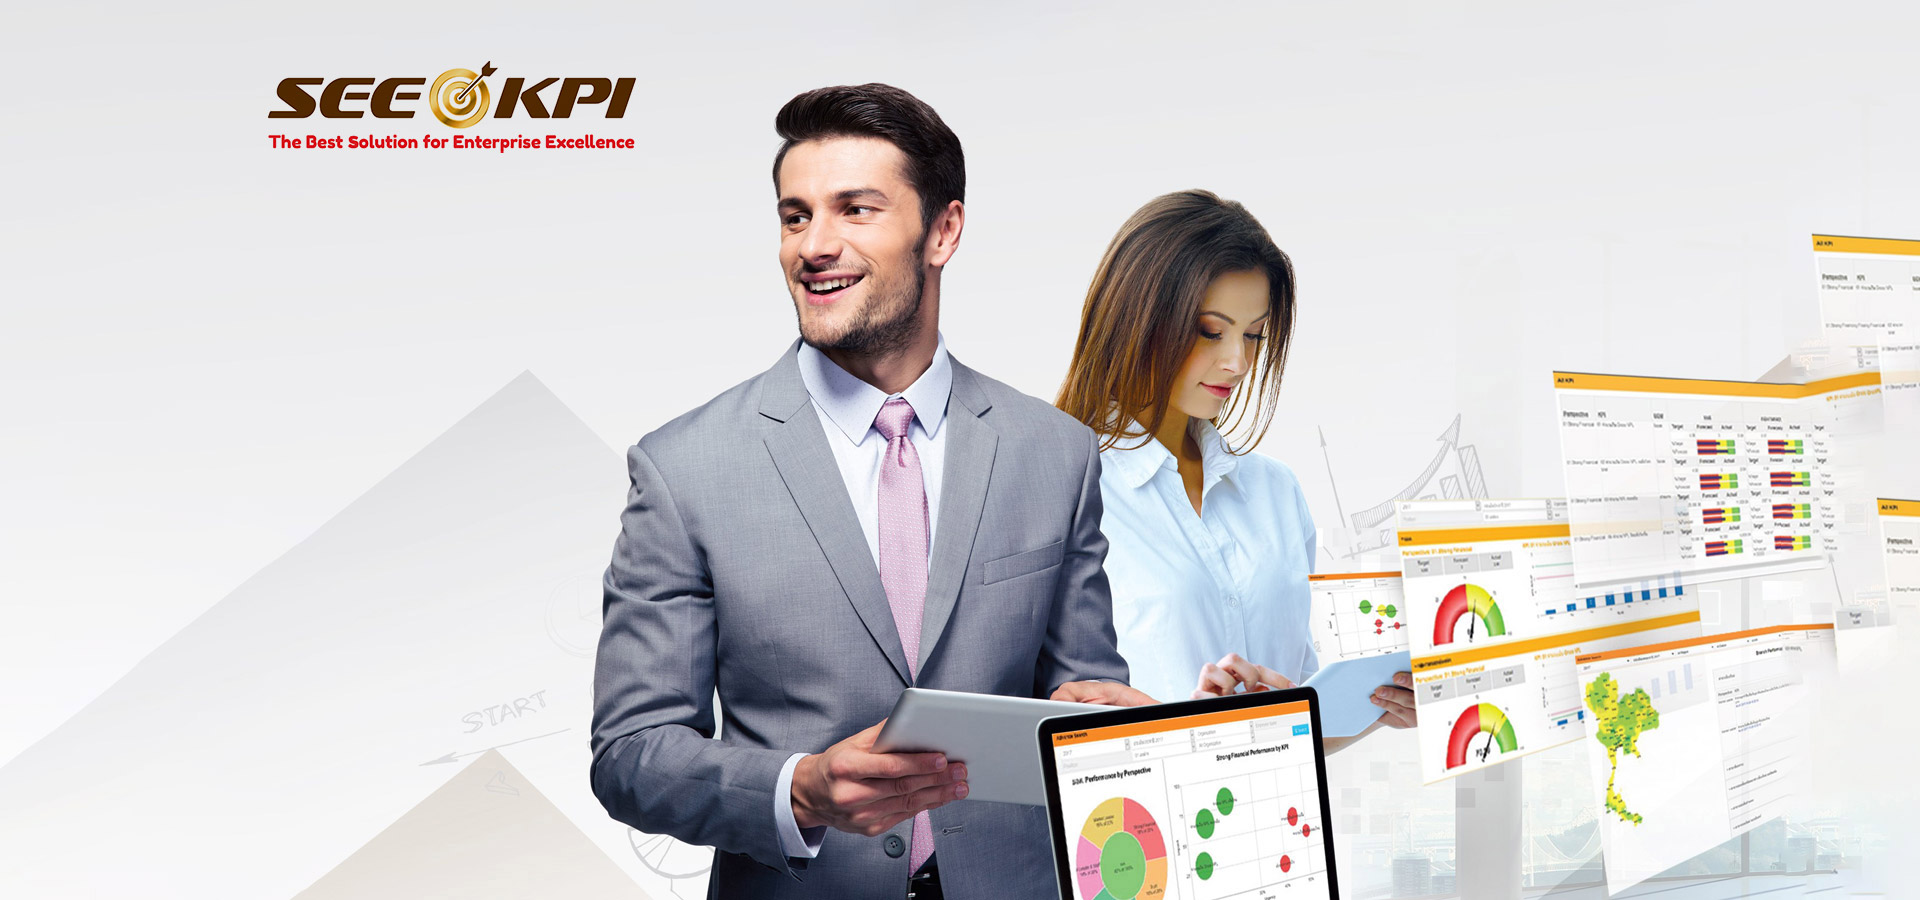 SEE KPI - PPCC บริษัทติดตั้งระบบ ERP โรงงาน 